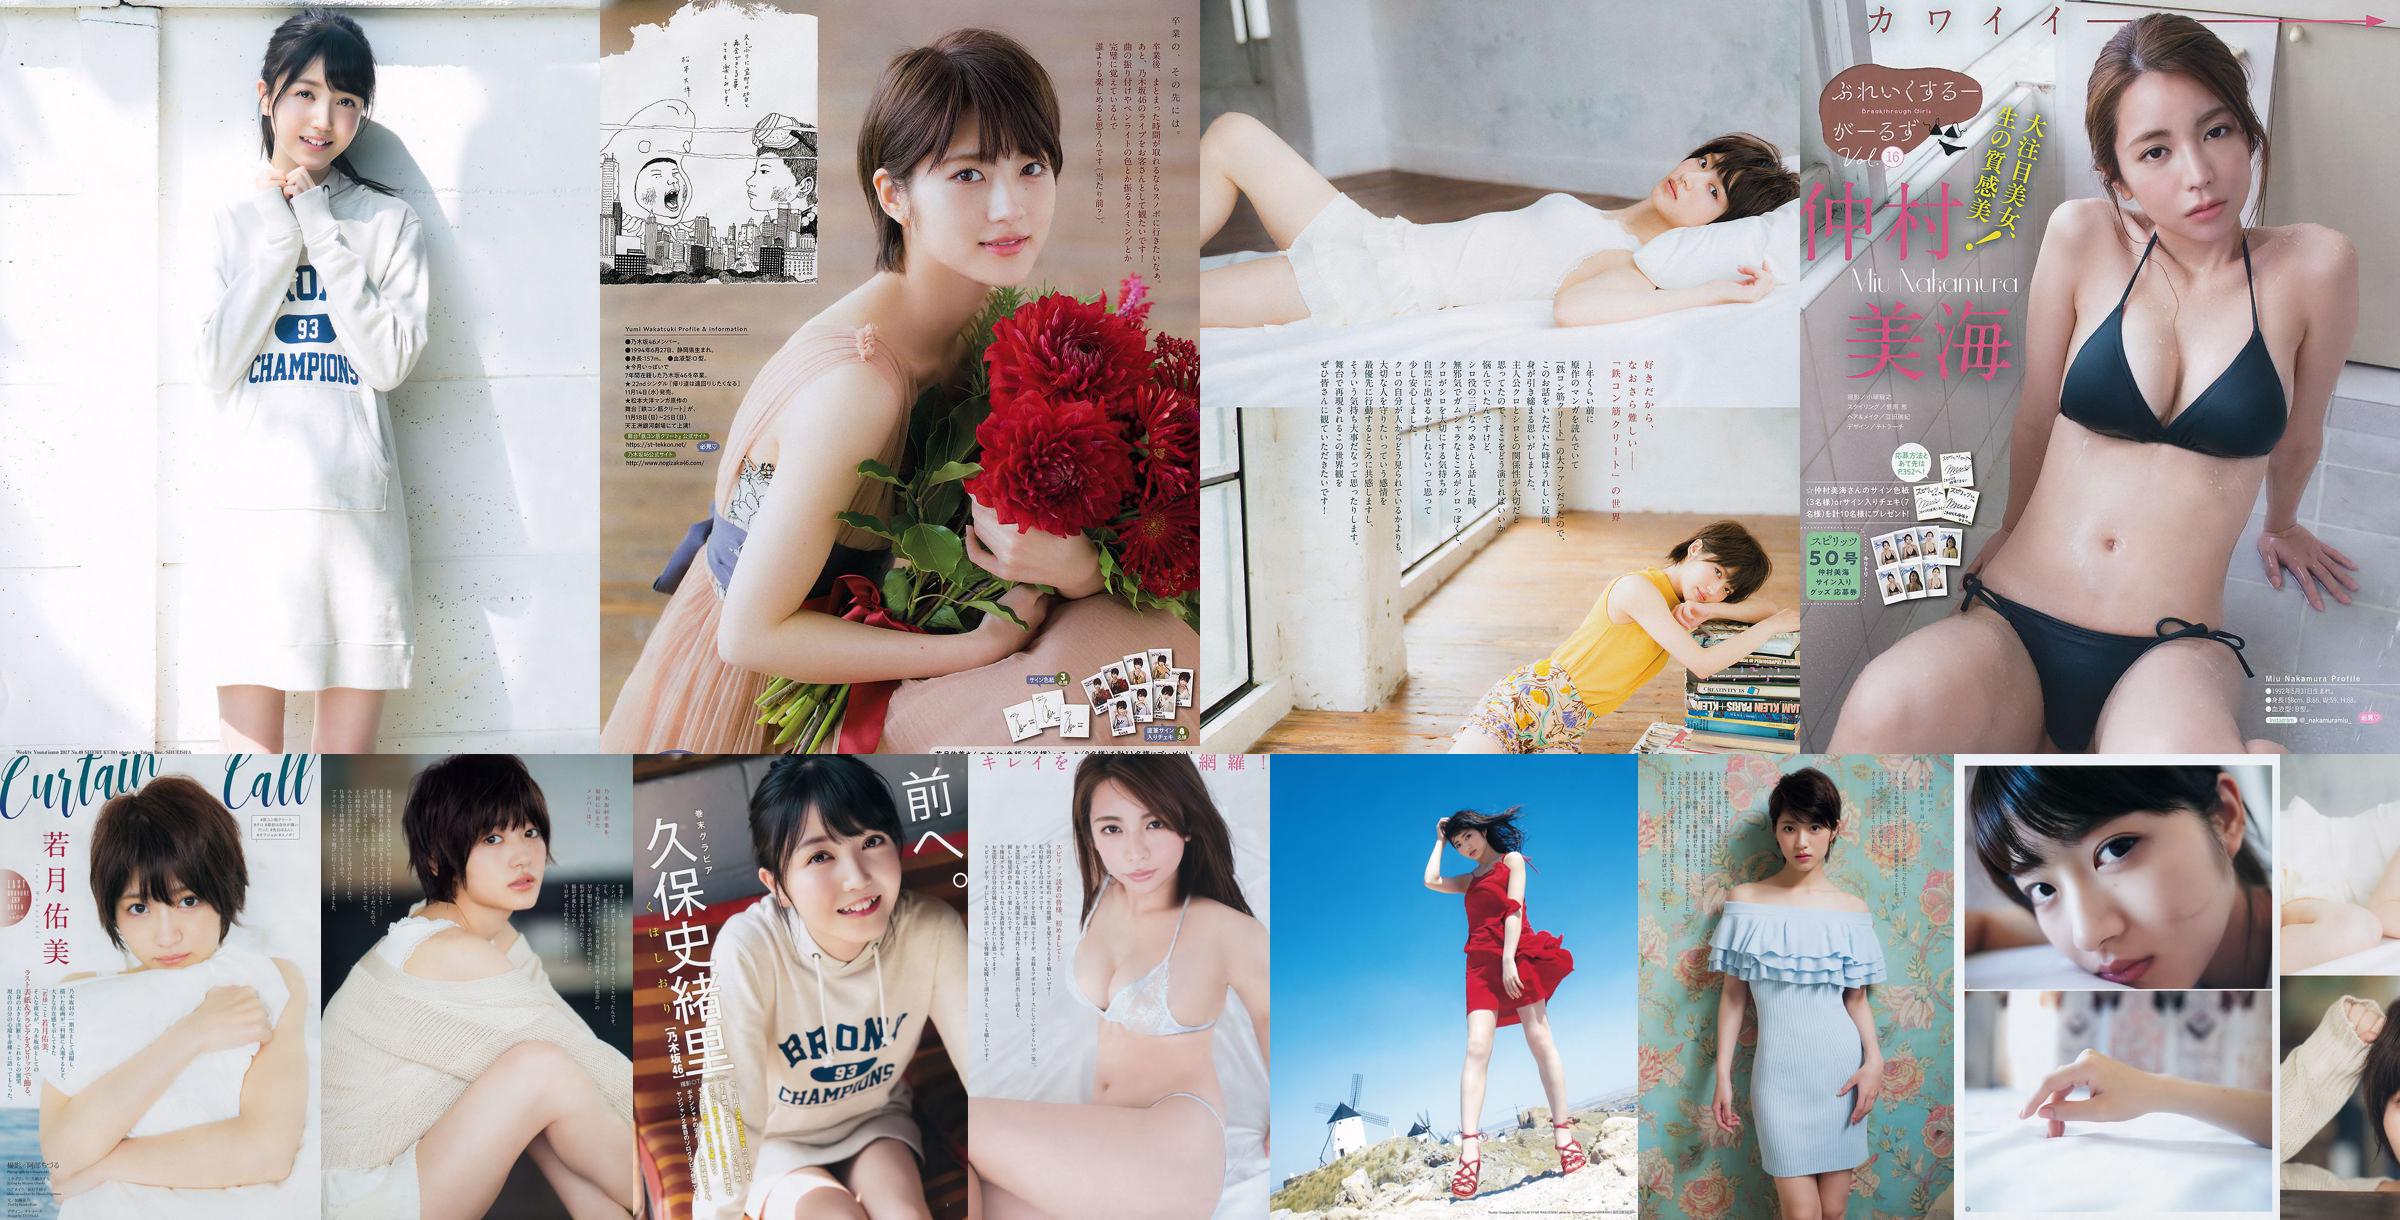 [Grands esprits de la bande dessinée hebdomadaire] Wakazuki Yumi Nakamura Mihai 2018 Magazine photo n ° 50 No.0de1cb Page 3